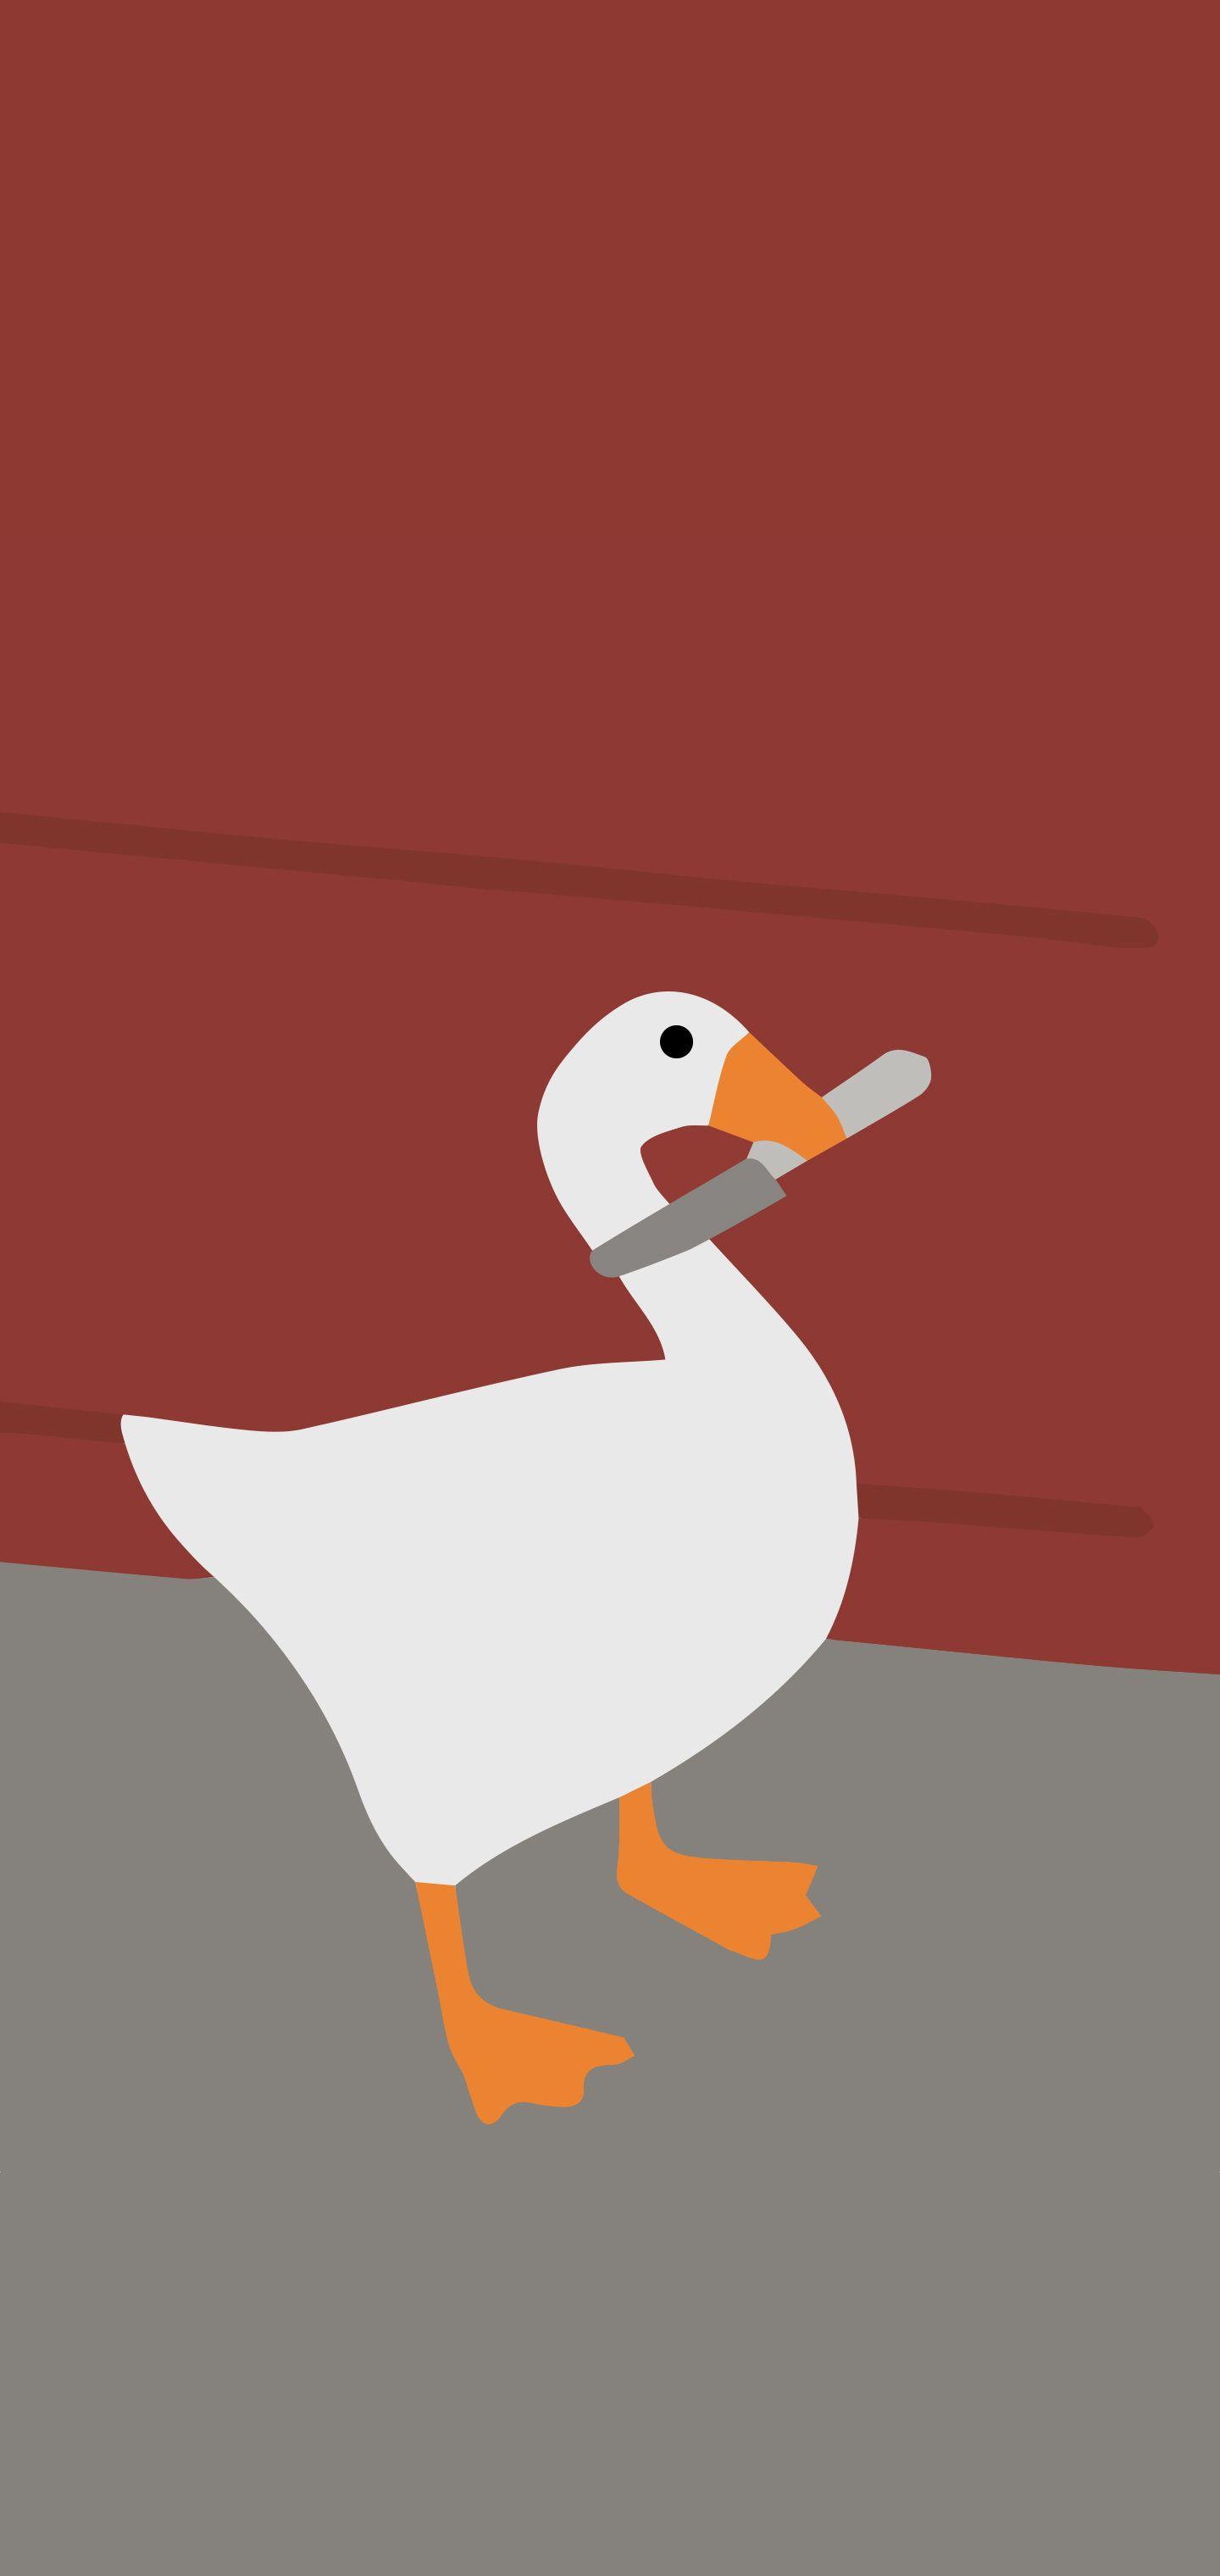 goose goose duck mobile